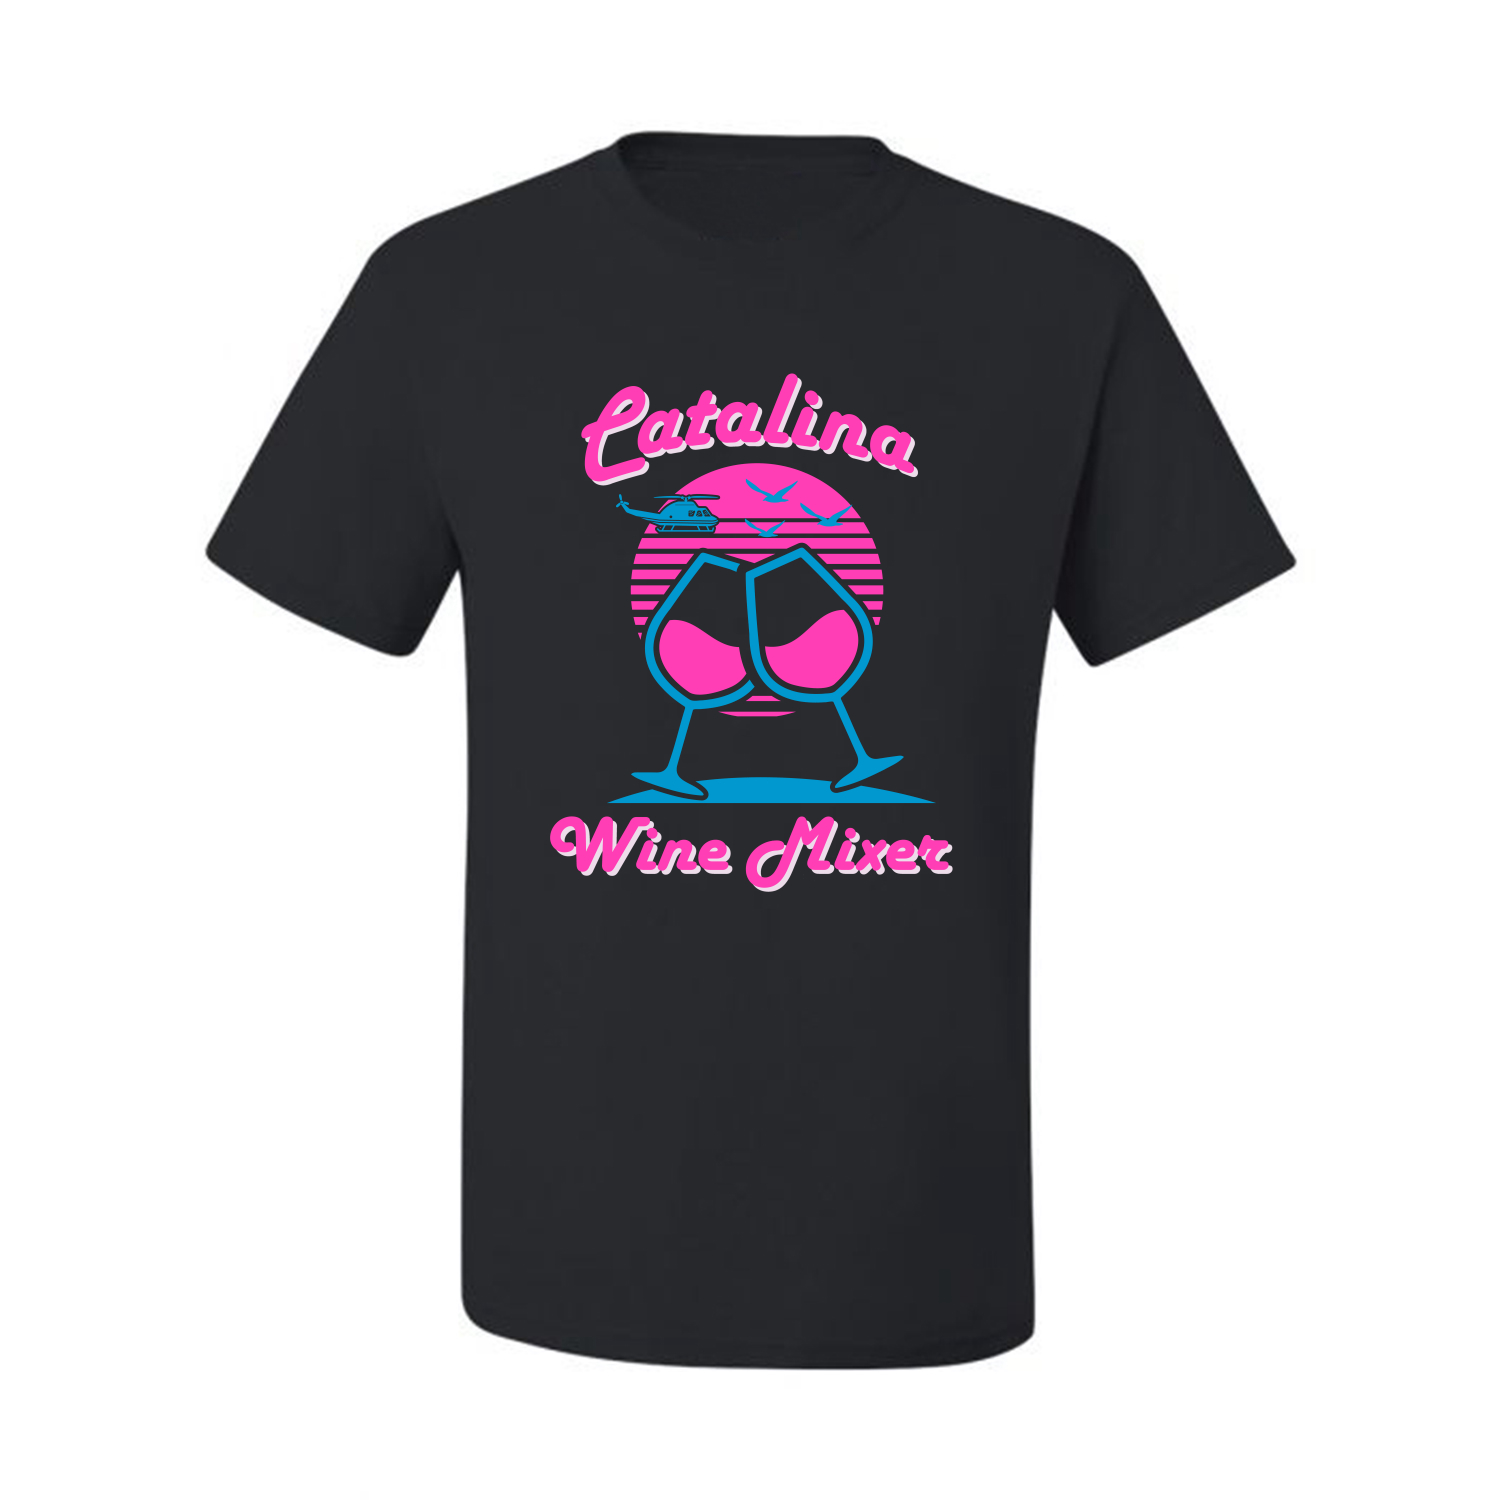 Catalina Wine Mixer Island Prestige Movie| Mens Pop Culture Graphic T-Shirt, Black, Small - image 2 of 4